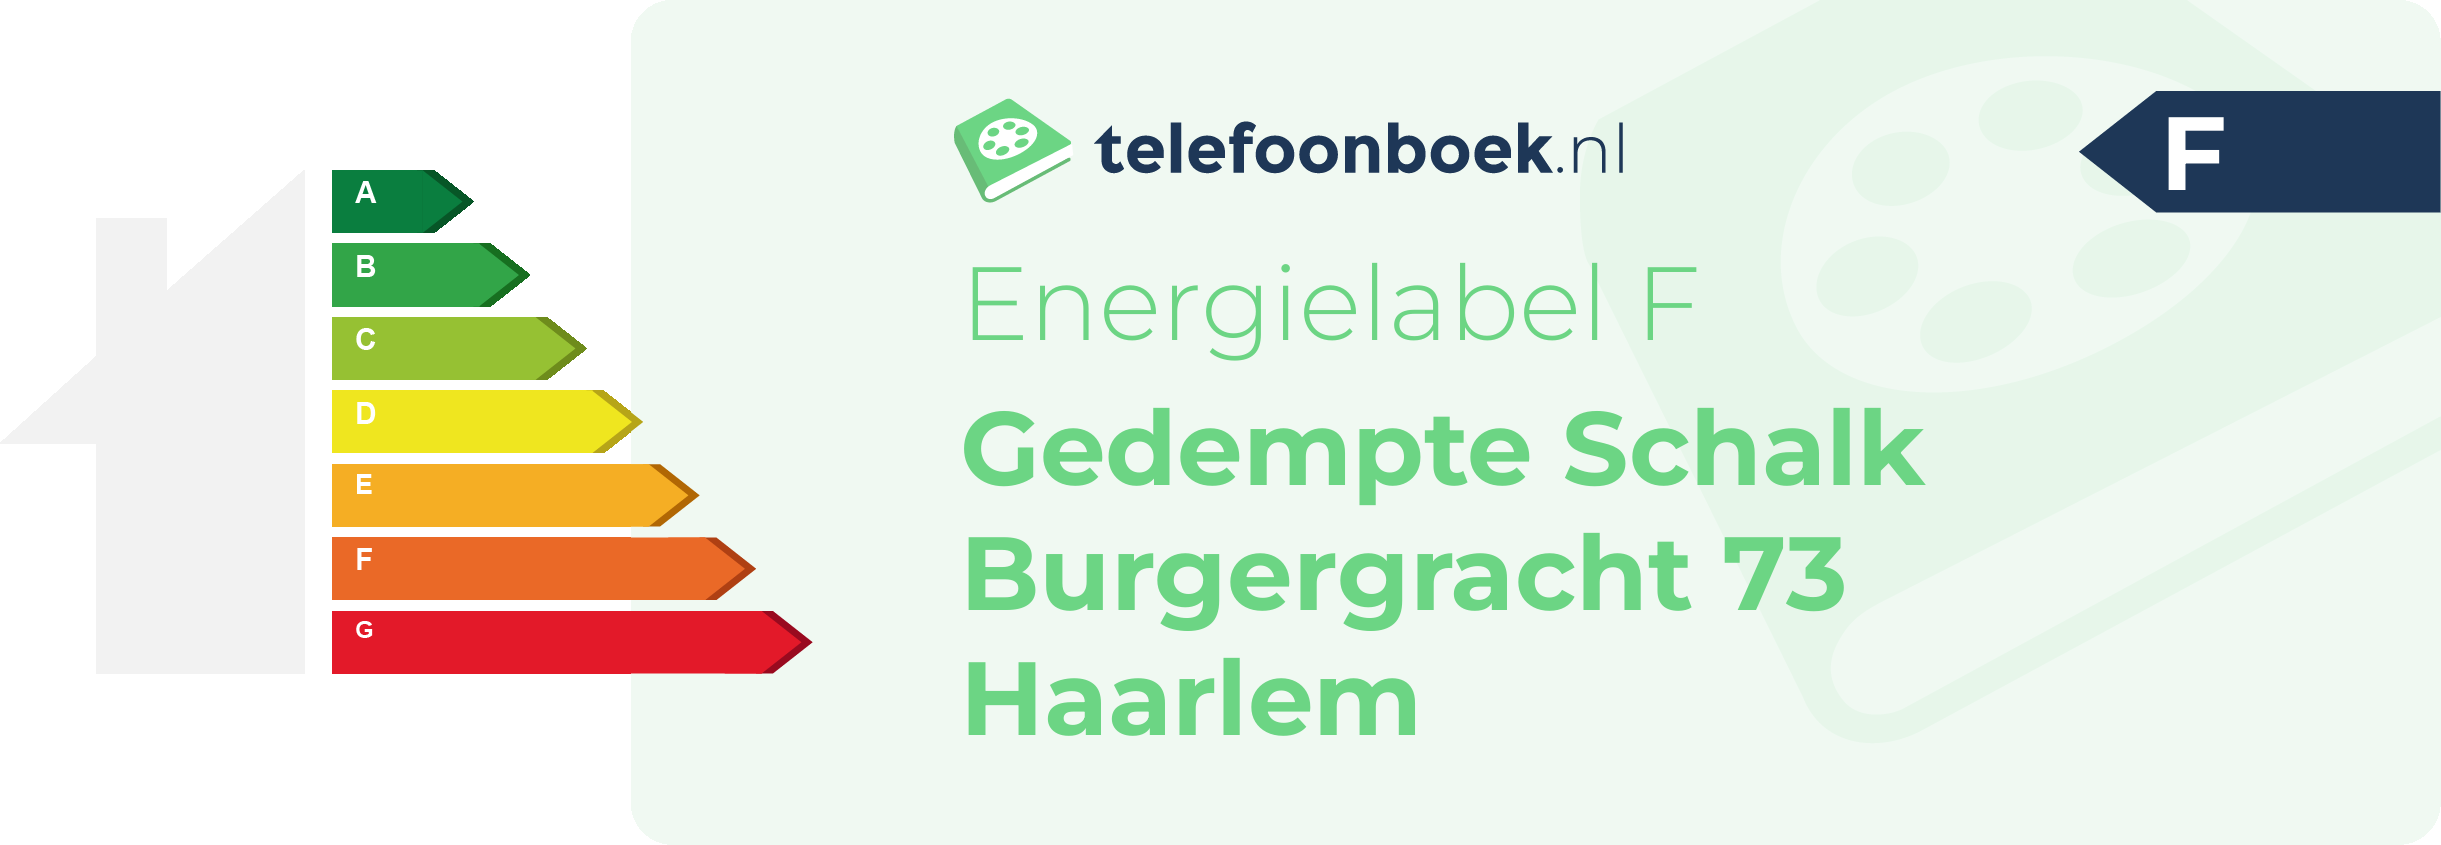 Energielabel Gedempte Schalk Burgergracht 73 Haarlem